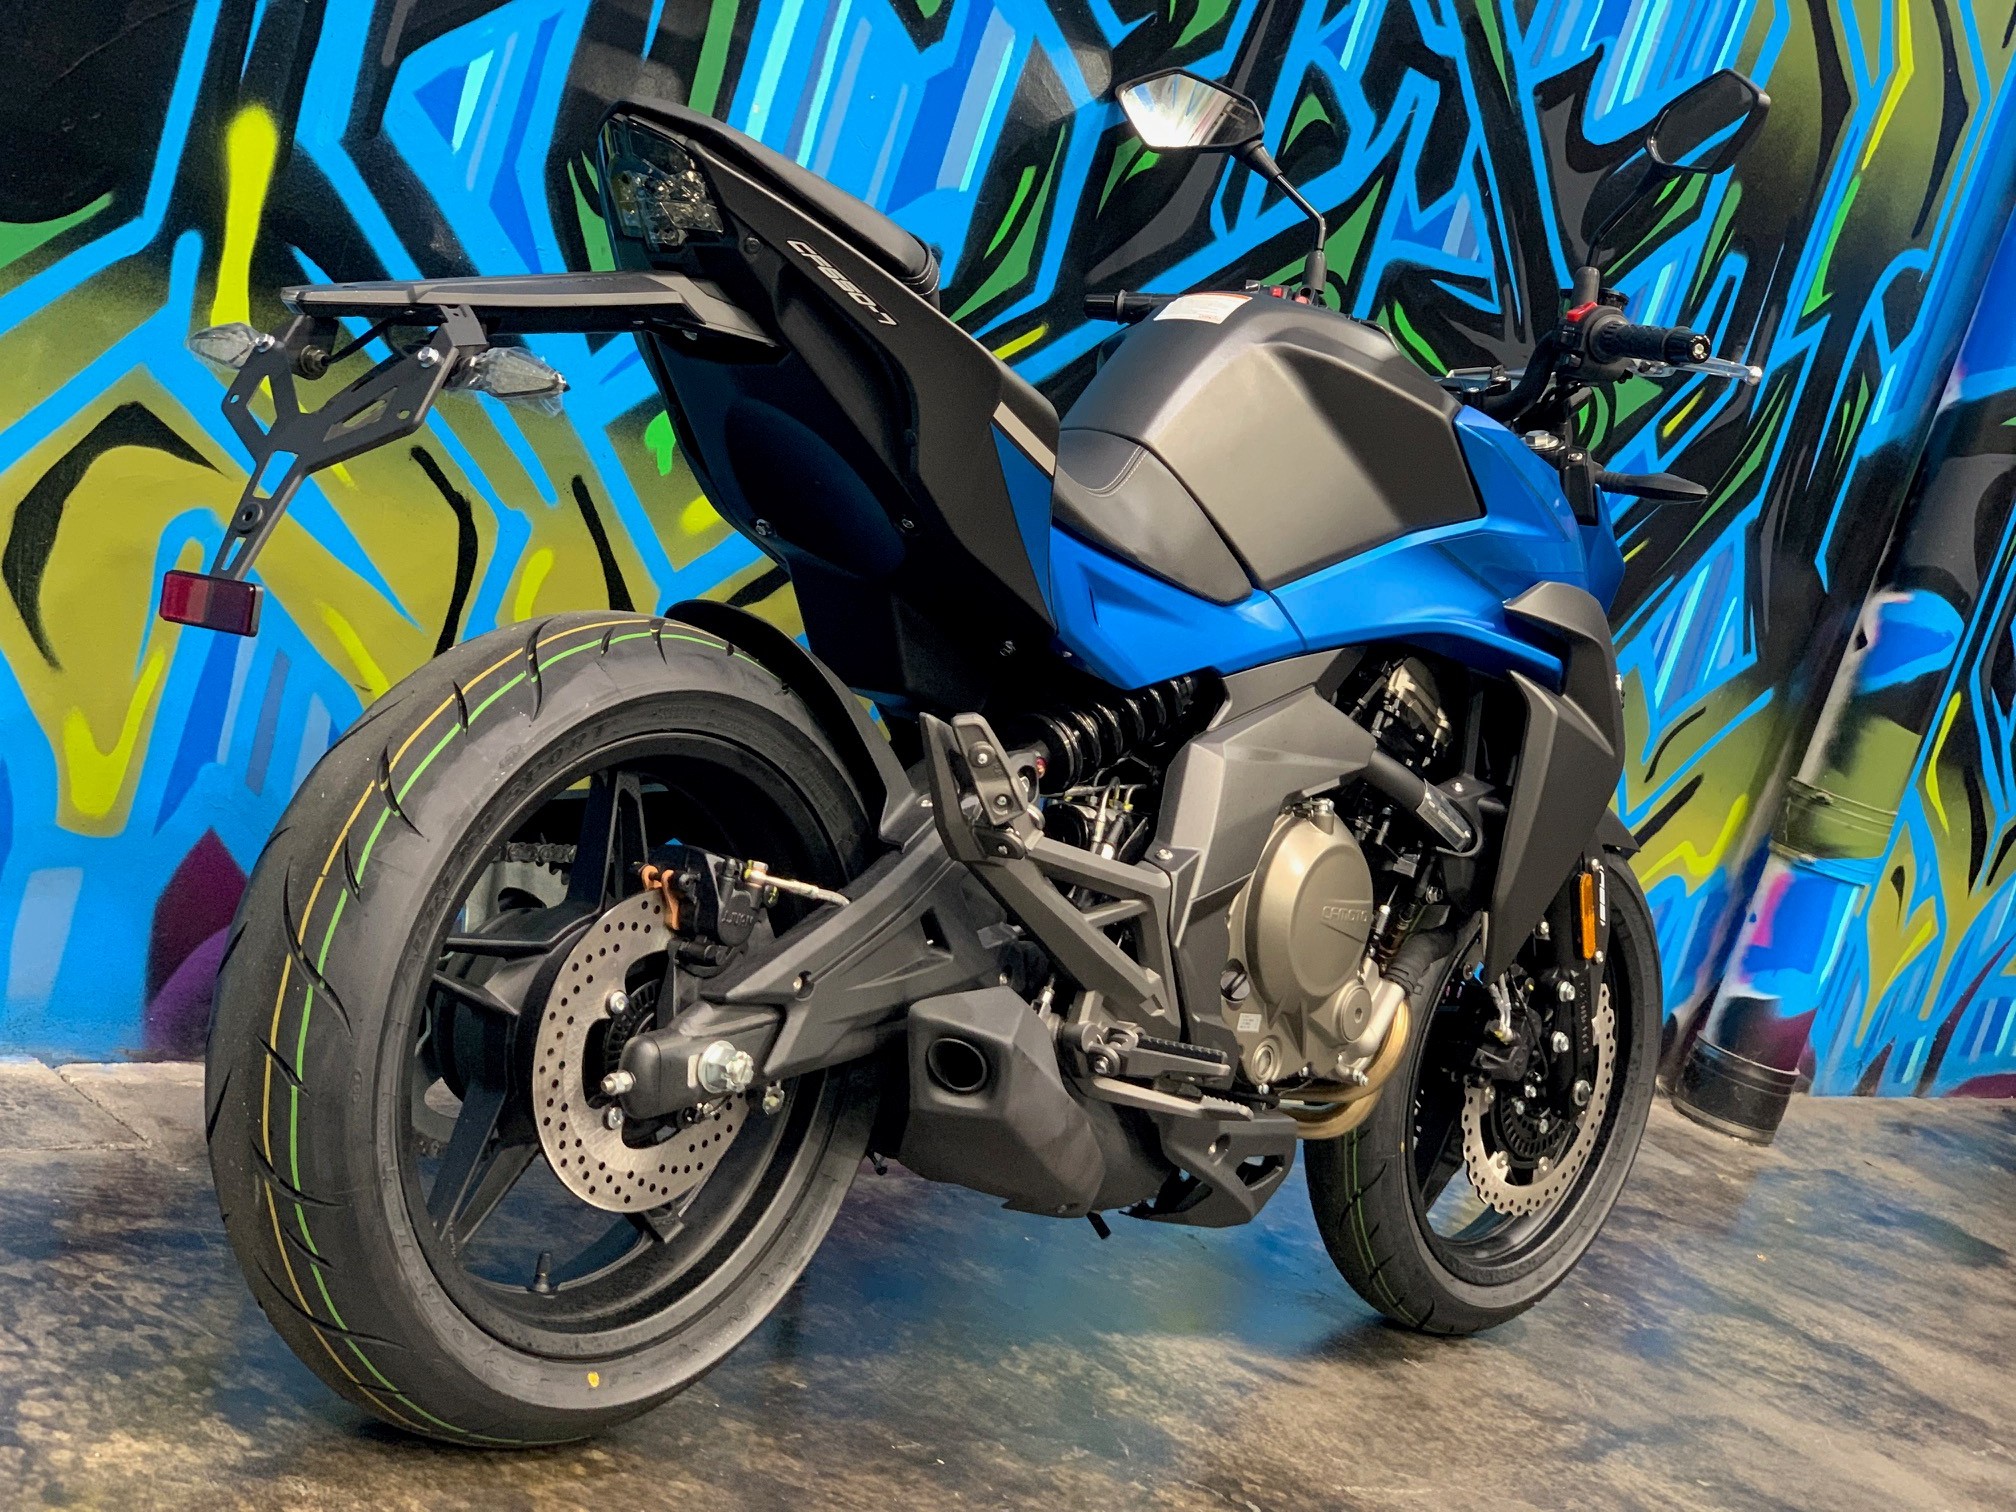 CF Moto 650NK 2019 STD Bike Photos - Overdrive